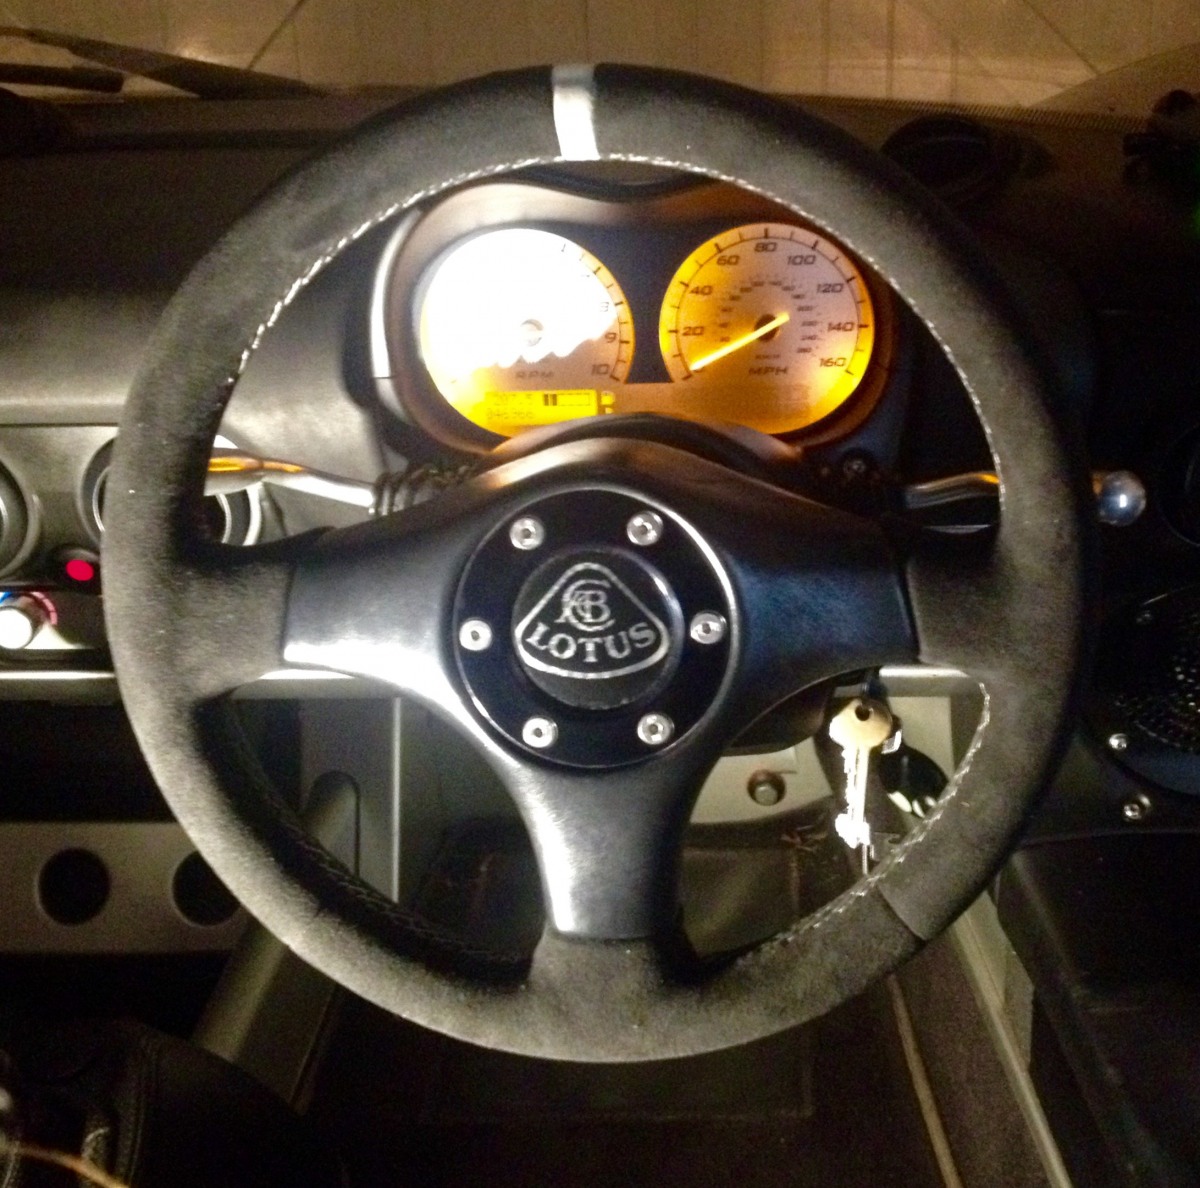 Sports steering wheel Lotus Alcantara/Leder Facelift